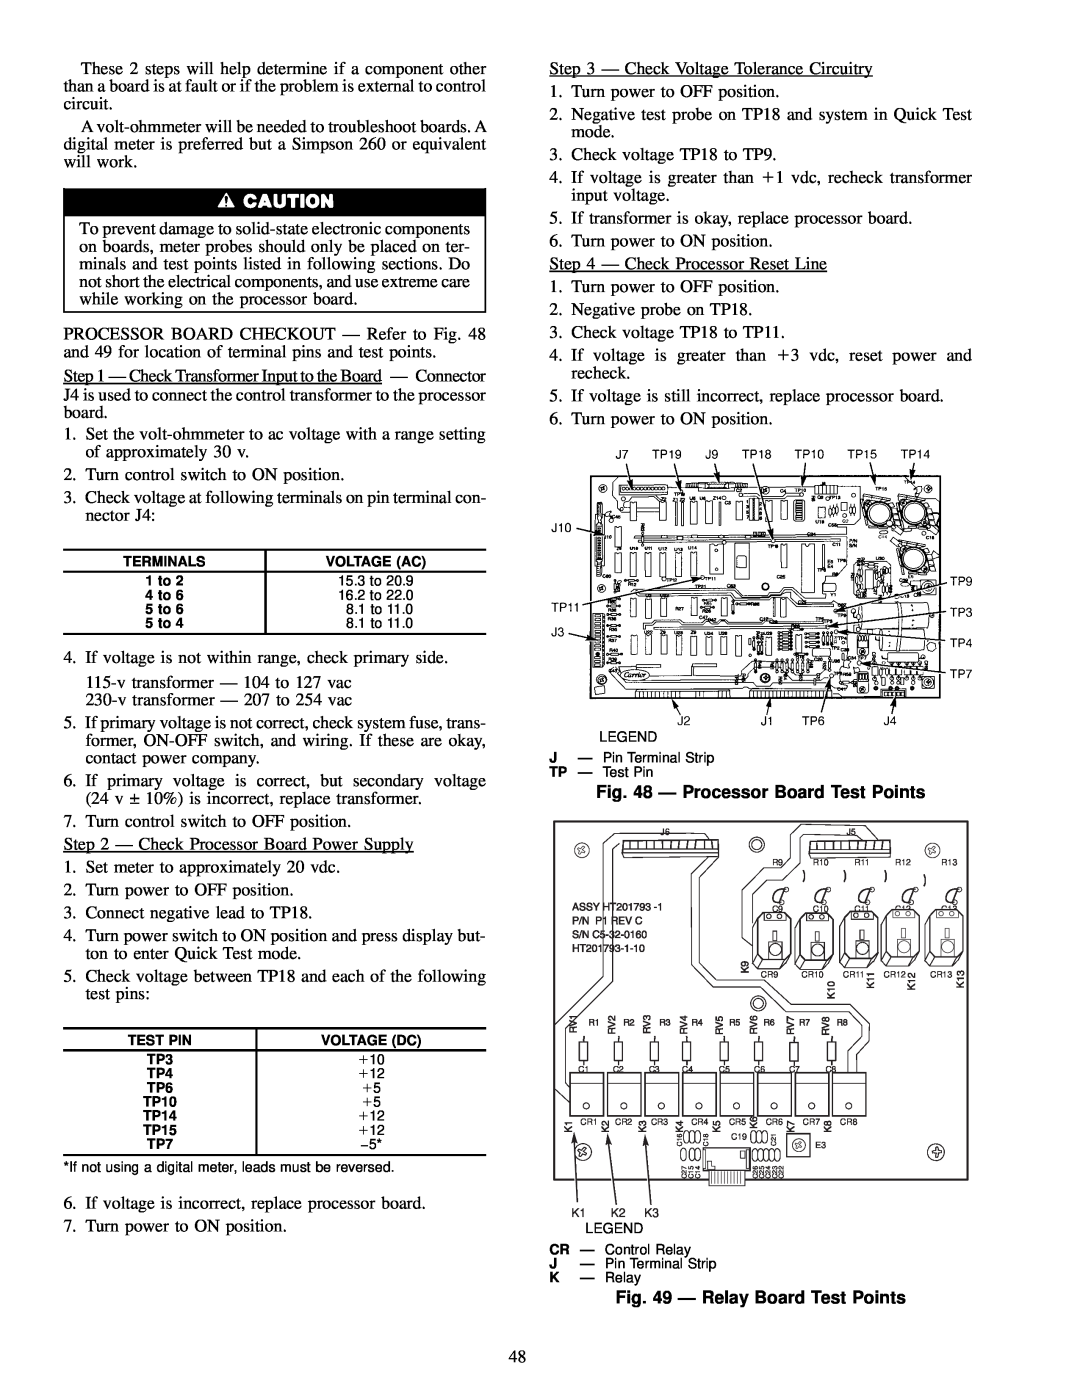 Carrier JK034-074, 50FK, 48FK specifications Ð Processor Board Test Points, Ð Relay Board Test Points 